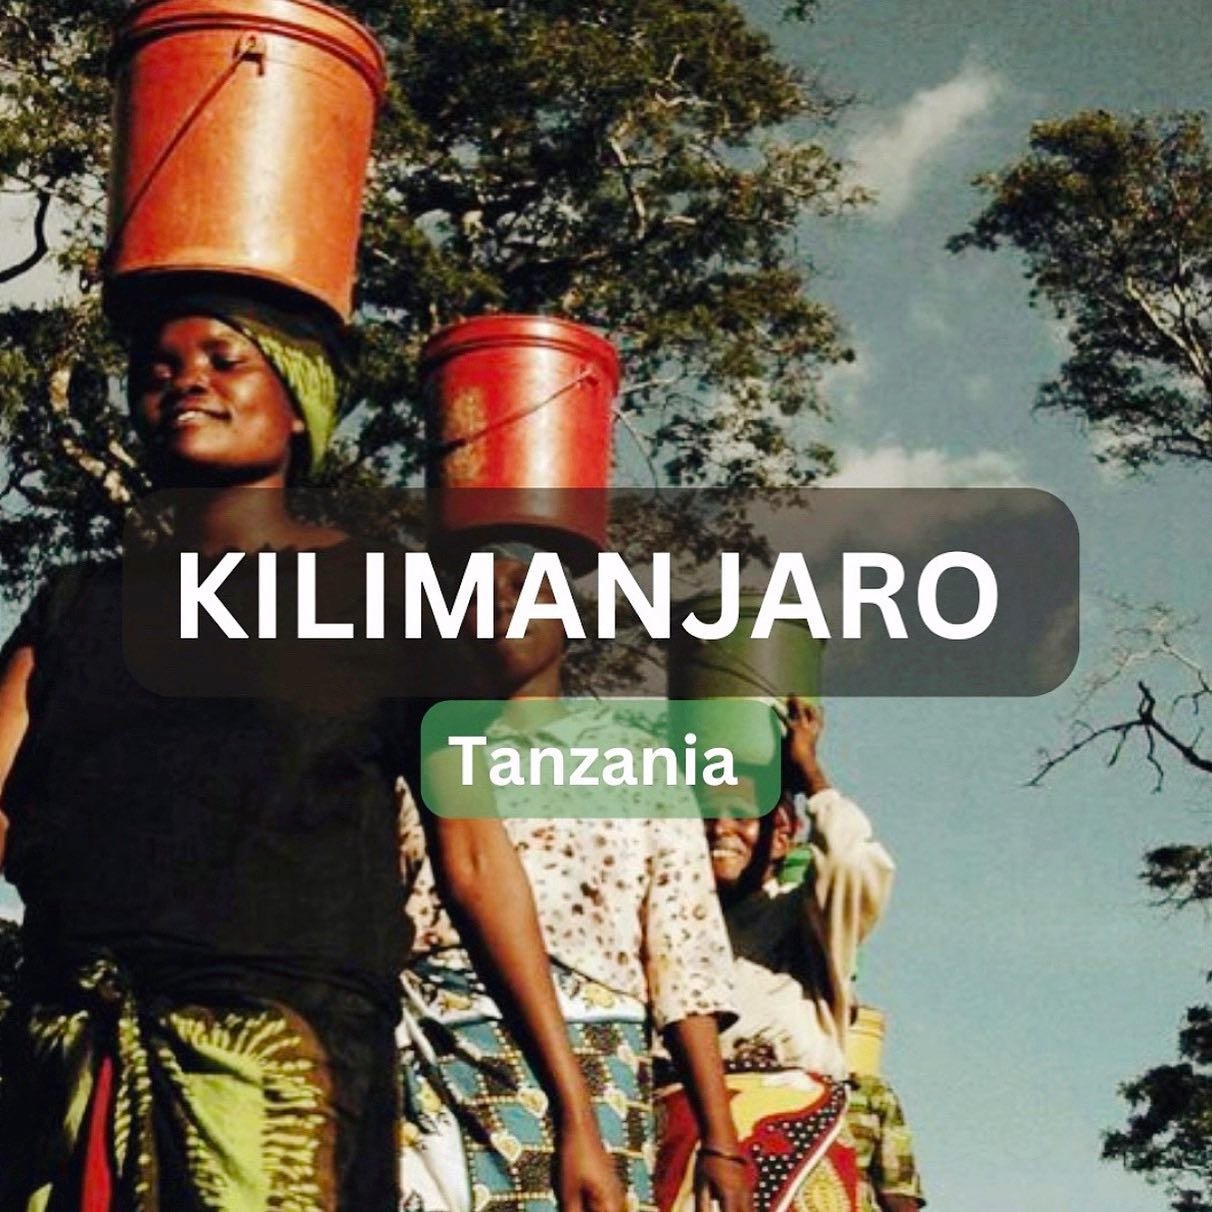 Our Kilimanjaro roast is BACK! ☕️ Get your favorite African bean fix online now. #Kilimanjaro #coffee #backinstock #tanzaniancoffee 

✨link in bio✨